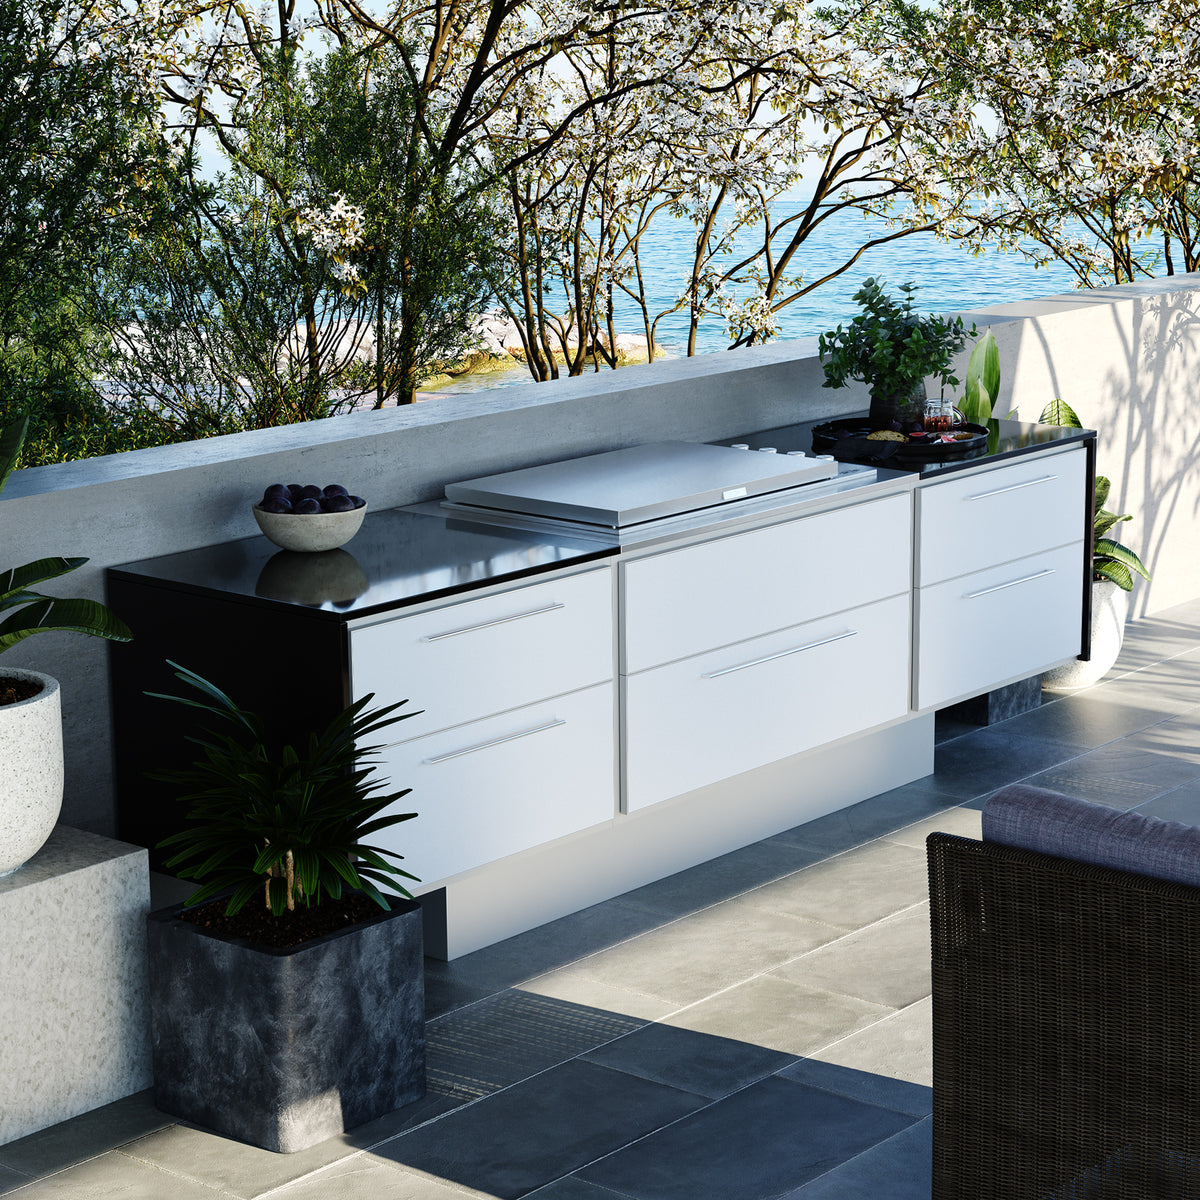 Profresco Proline Flat Lid 6 Burner Barbecue Aero Outdoor Kitchen- White